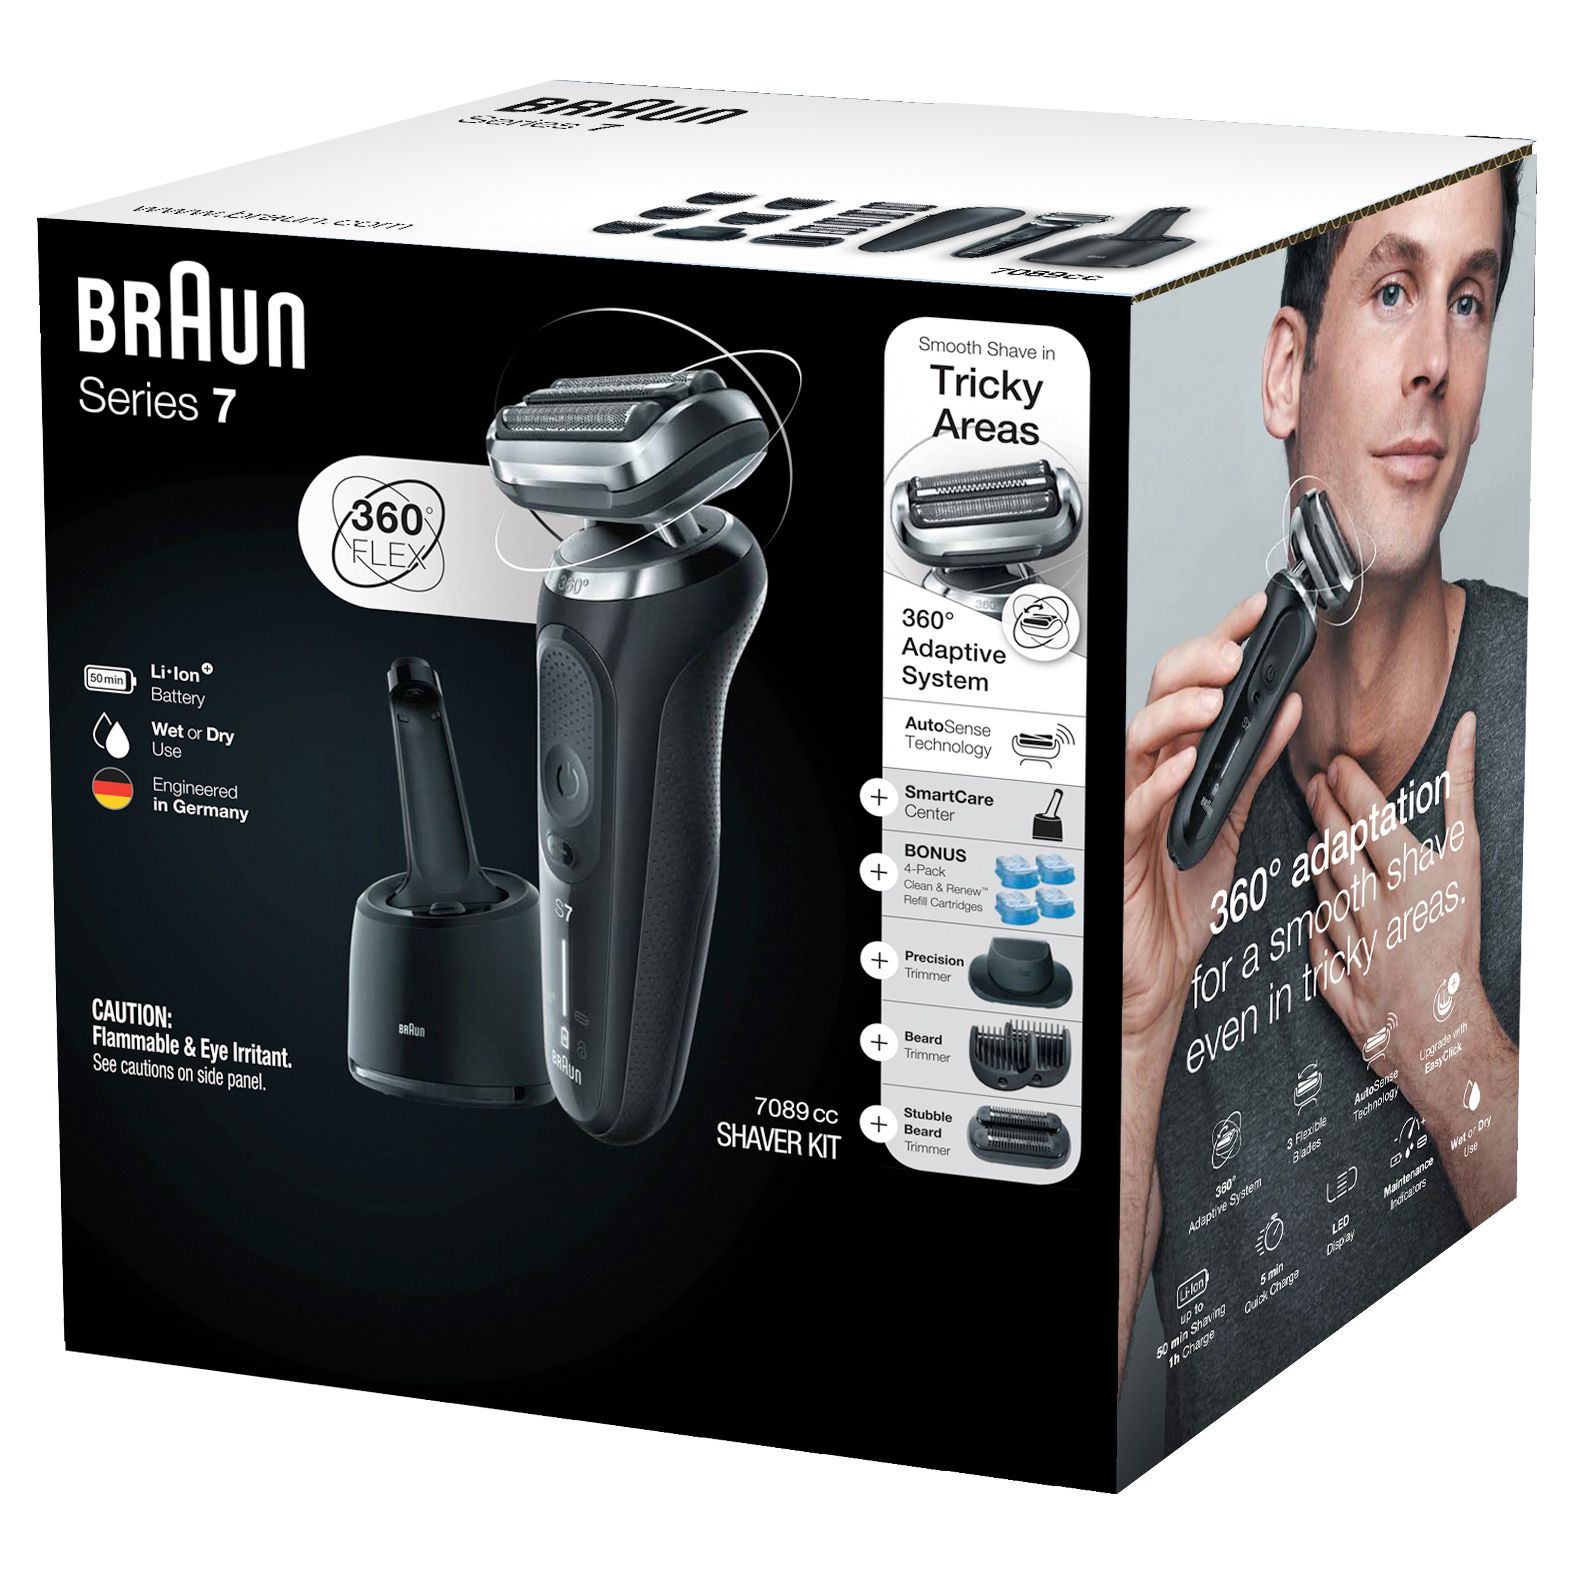 Braun Series 8: Premium electric razor range